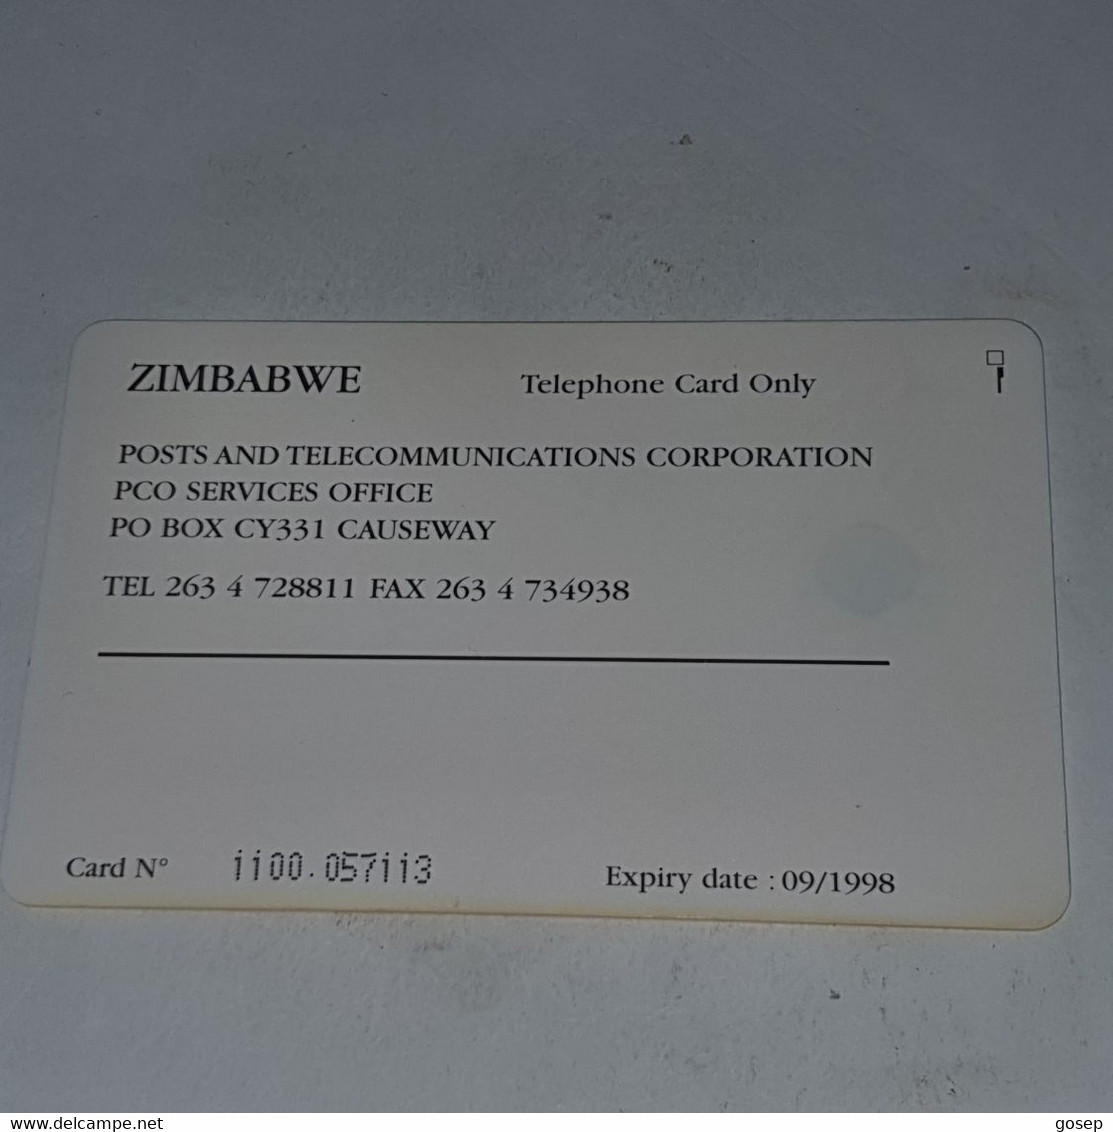 Zimbabwe-(ZIM-05A)-6thall Africa Games Red-(54)-($100)-(1100-057113)-(9/98)used Card+1card Free - Simbabwe